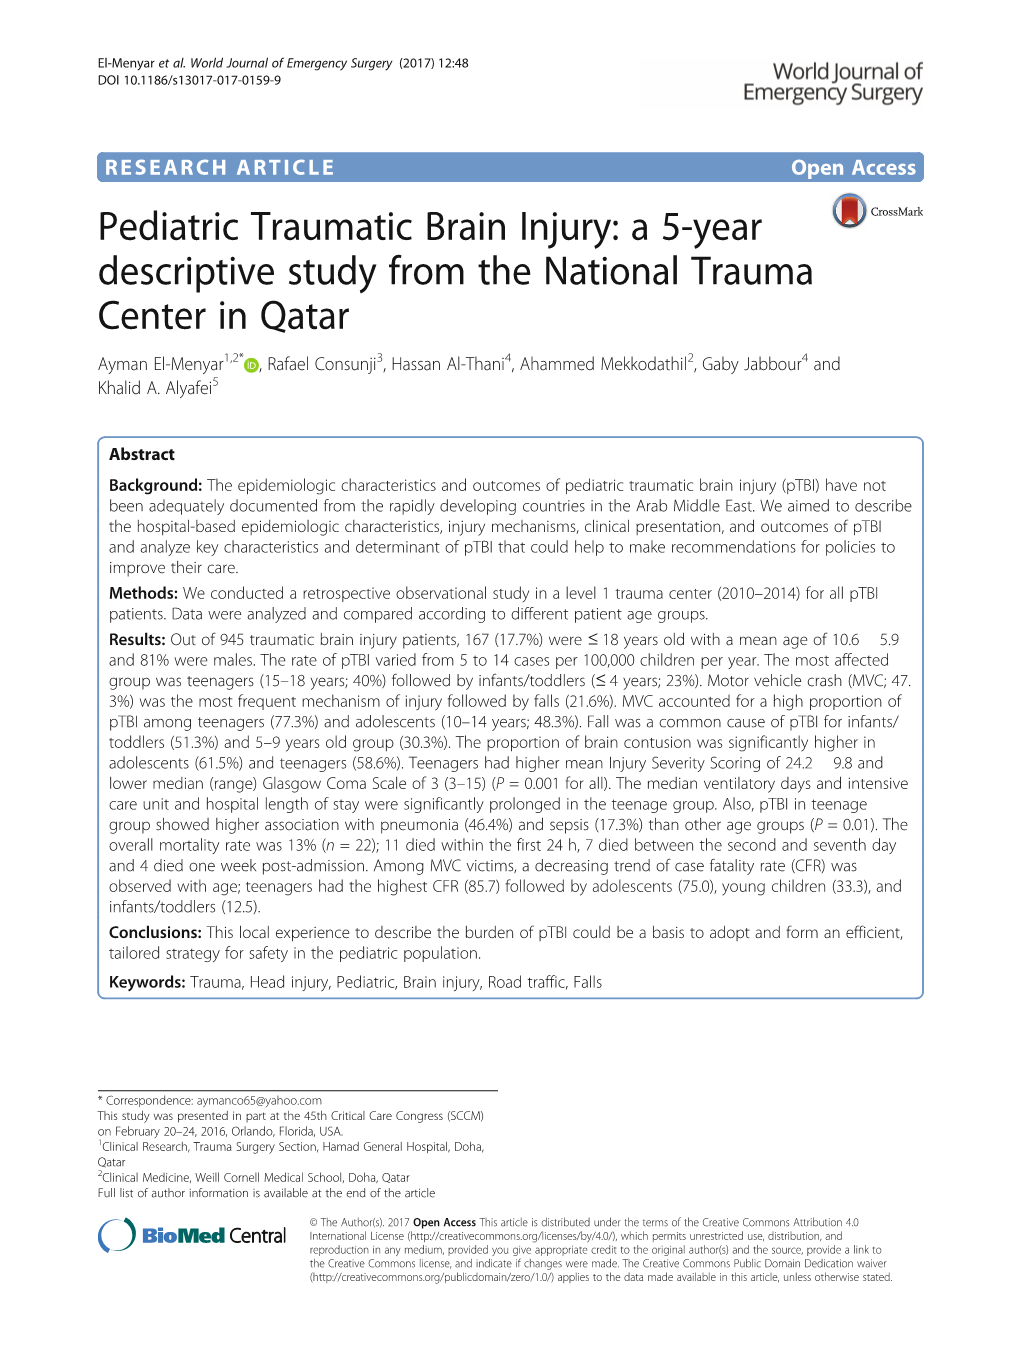 Pediatric Traumatic Brain Injury: a 5-Year Descriptive Study from The